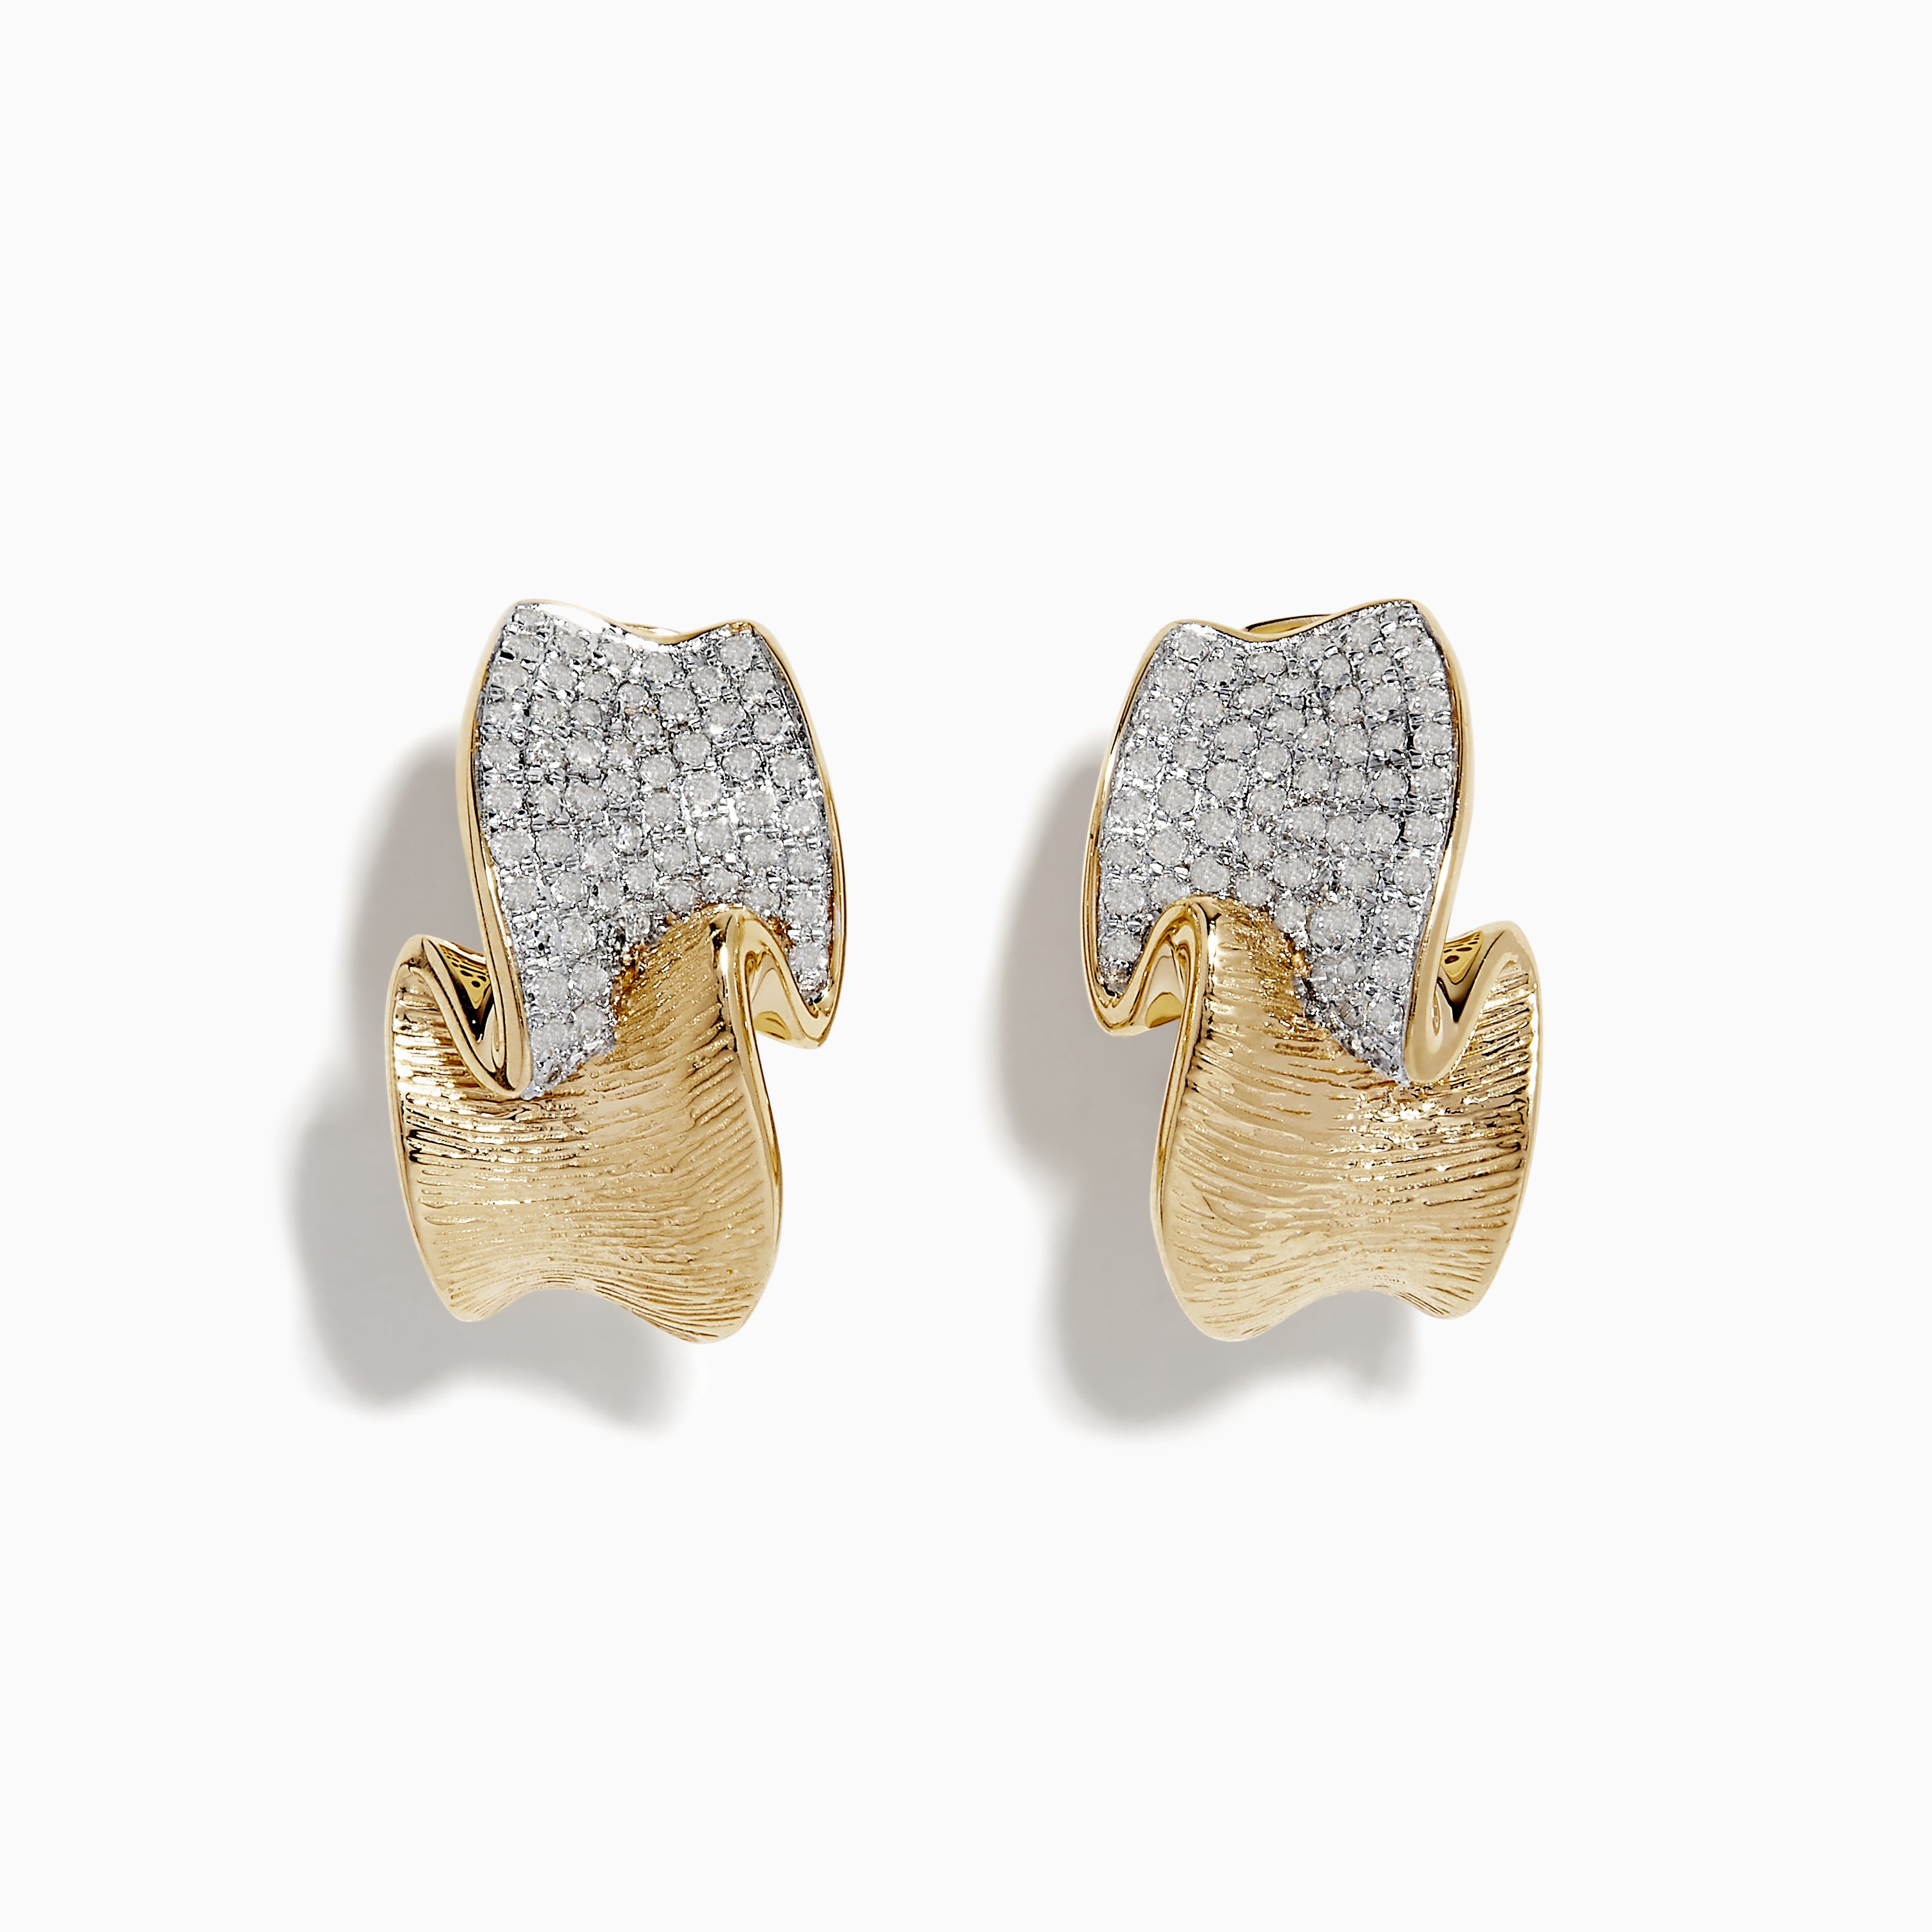 Effy D'Oro 14k Yellow Gold Pave Diamond Huggie Earrings